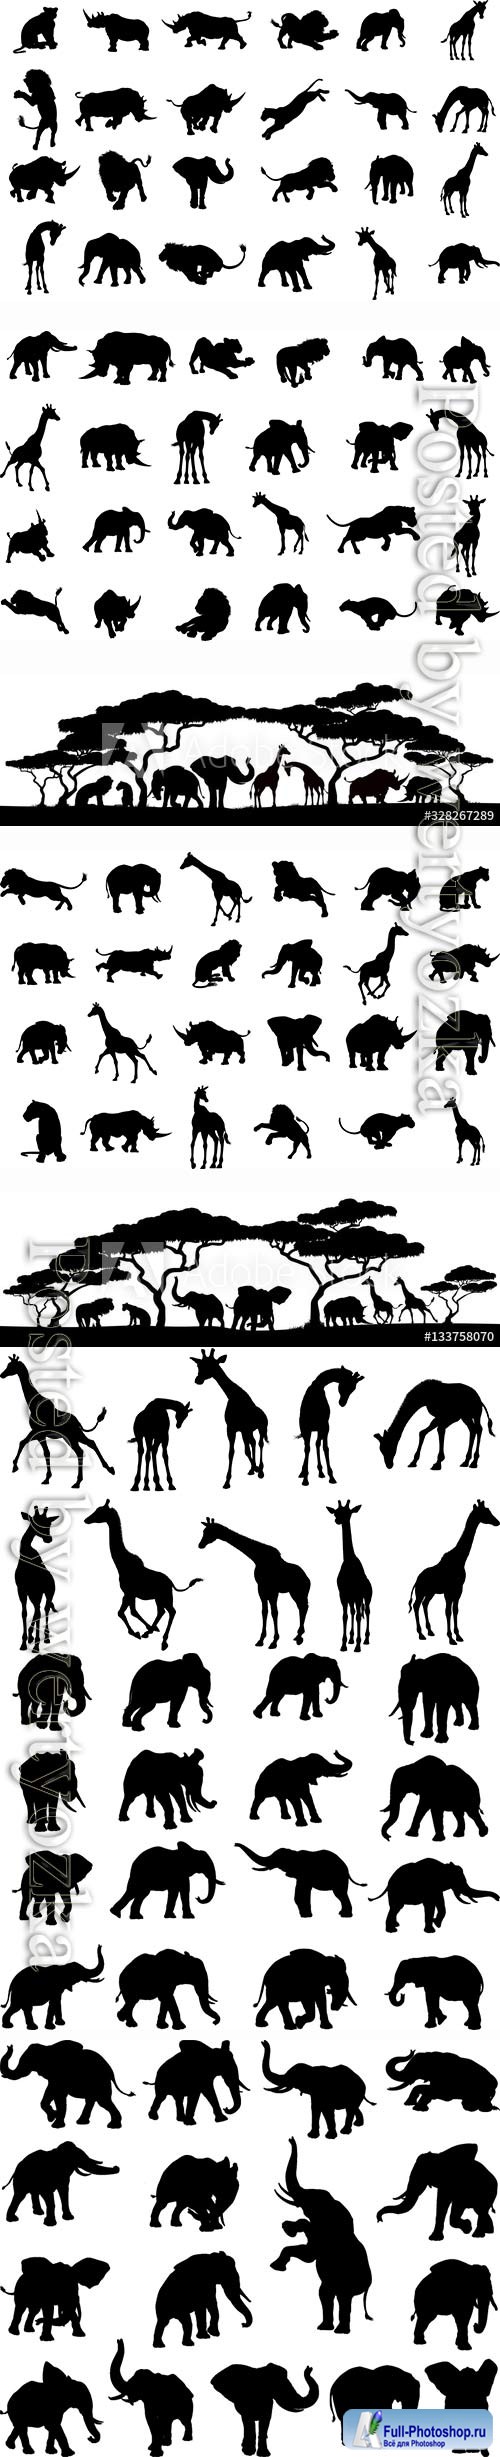 Silhouettes of animals in vector, elephant, giraffe, lion, rhino, leopard